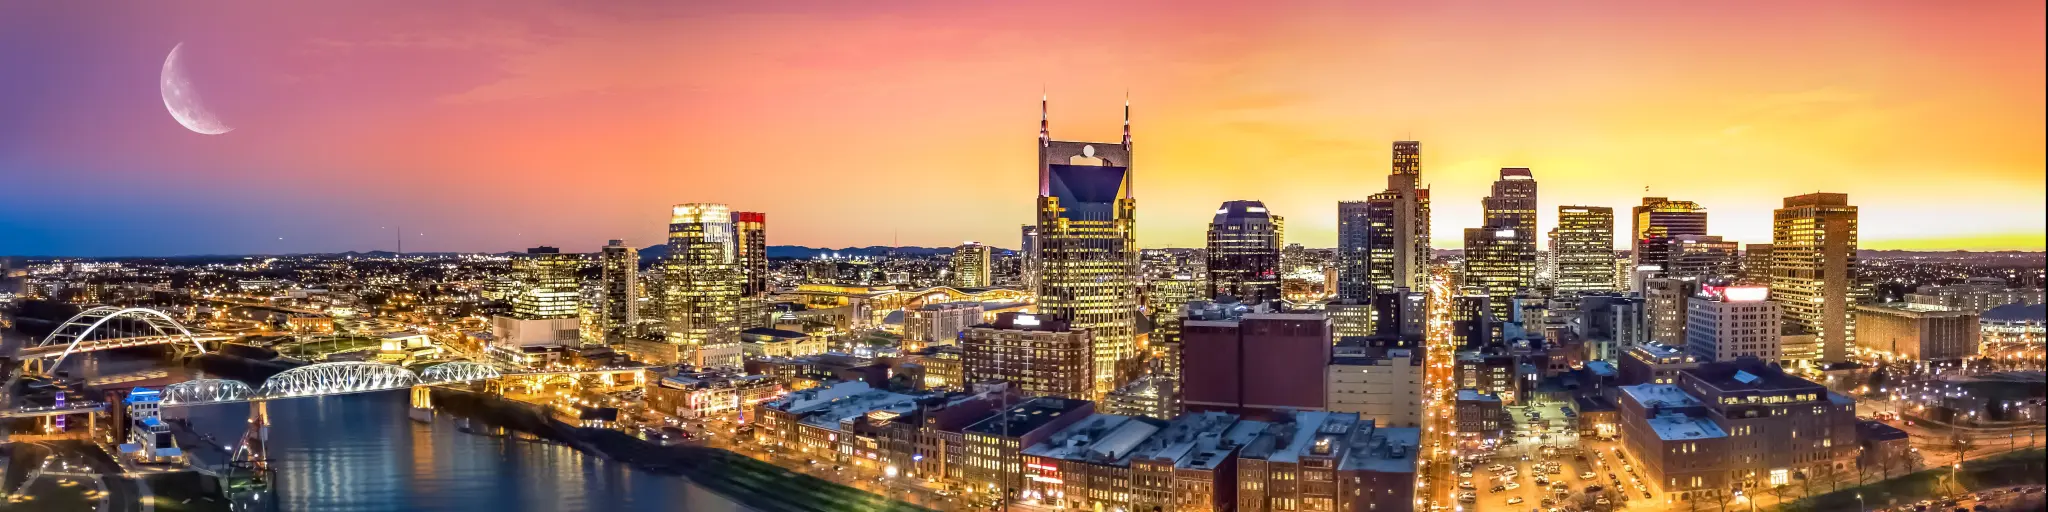 Nashville, Tennessee, USA skyline with moon at sunset.